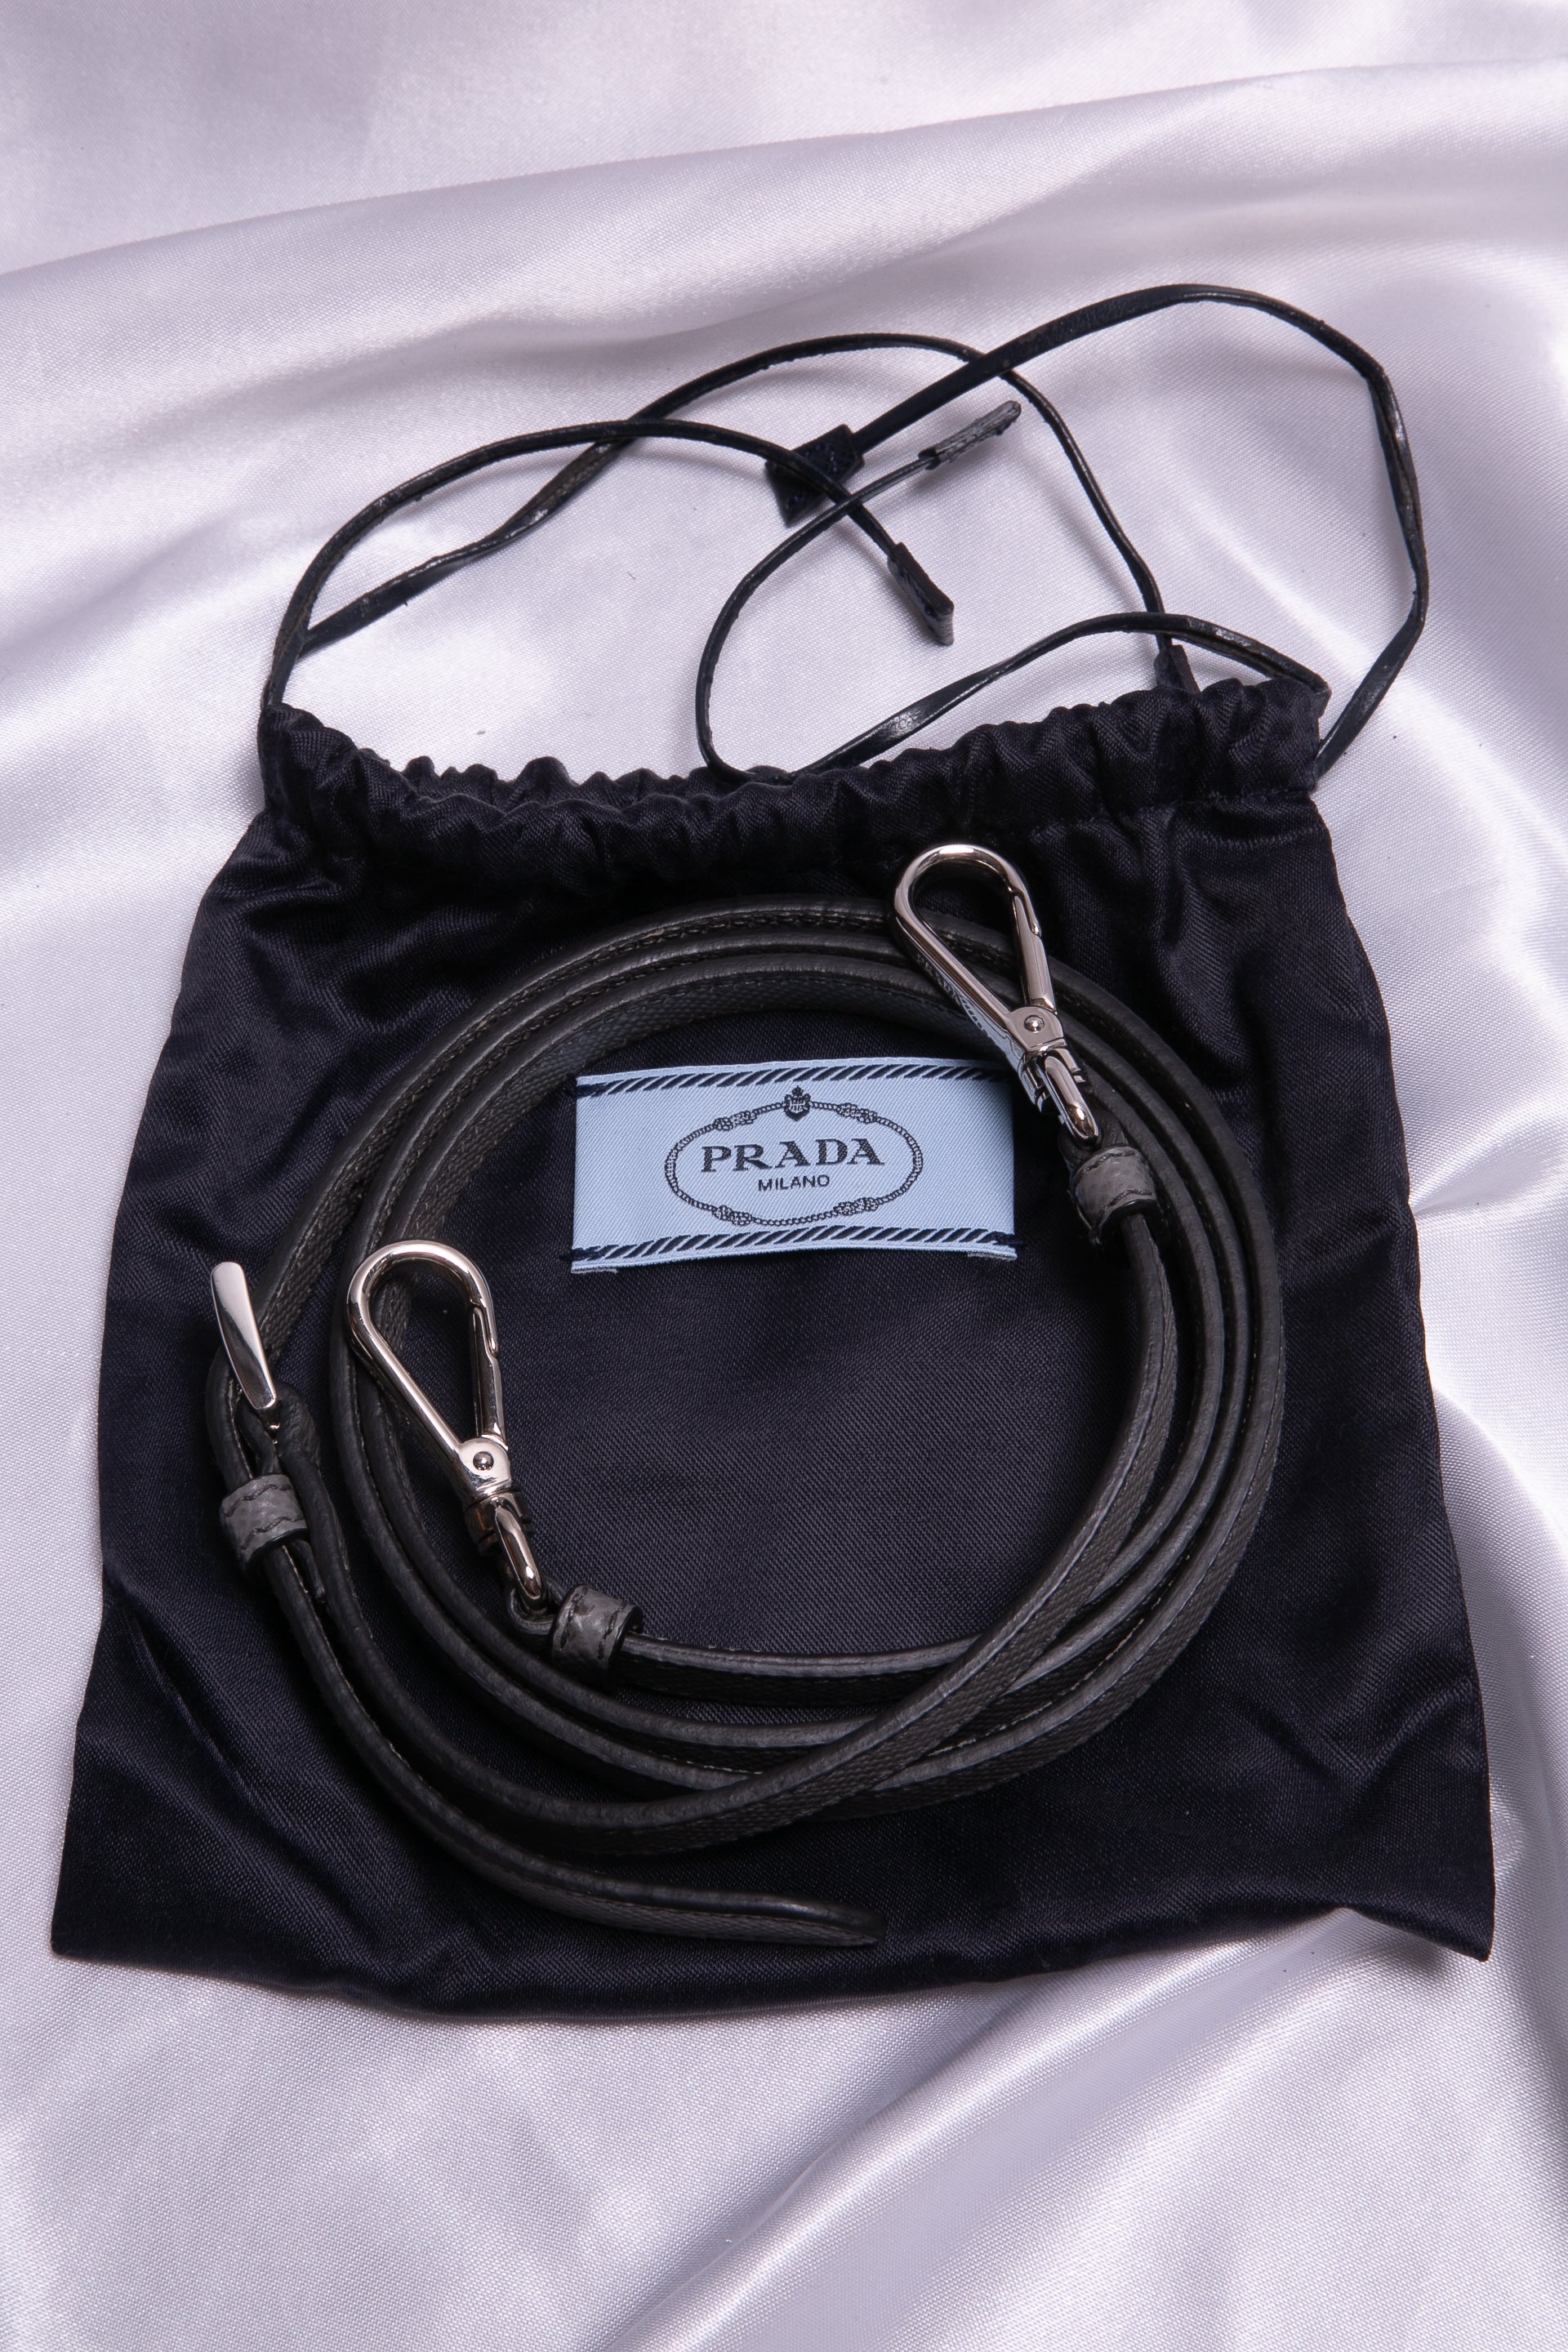 PRADA Saffiano Cuir Medium Double Bag Black Ciliegia 1239372